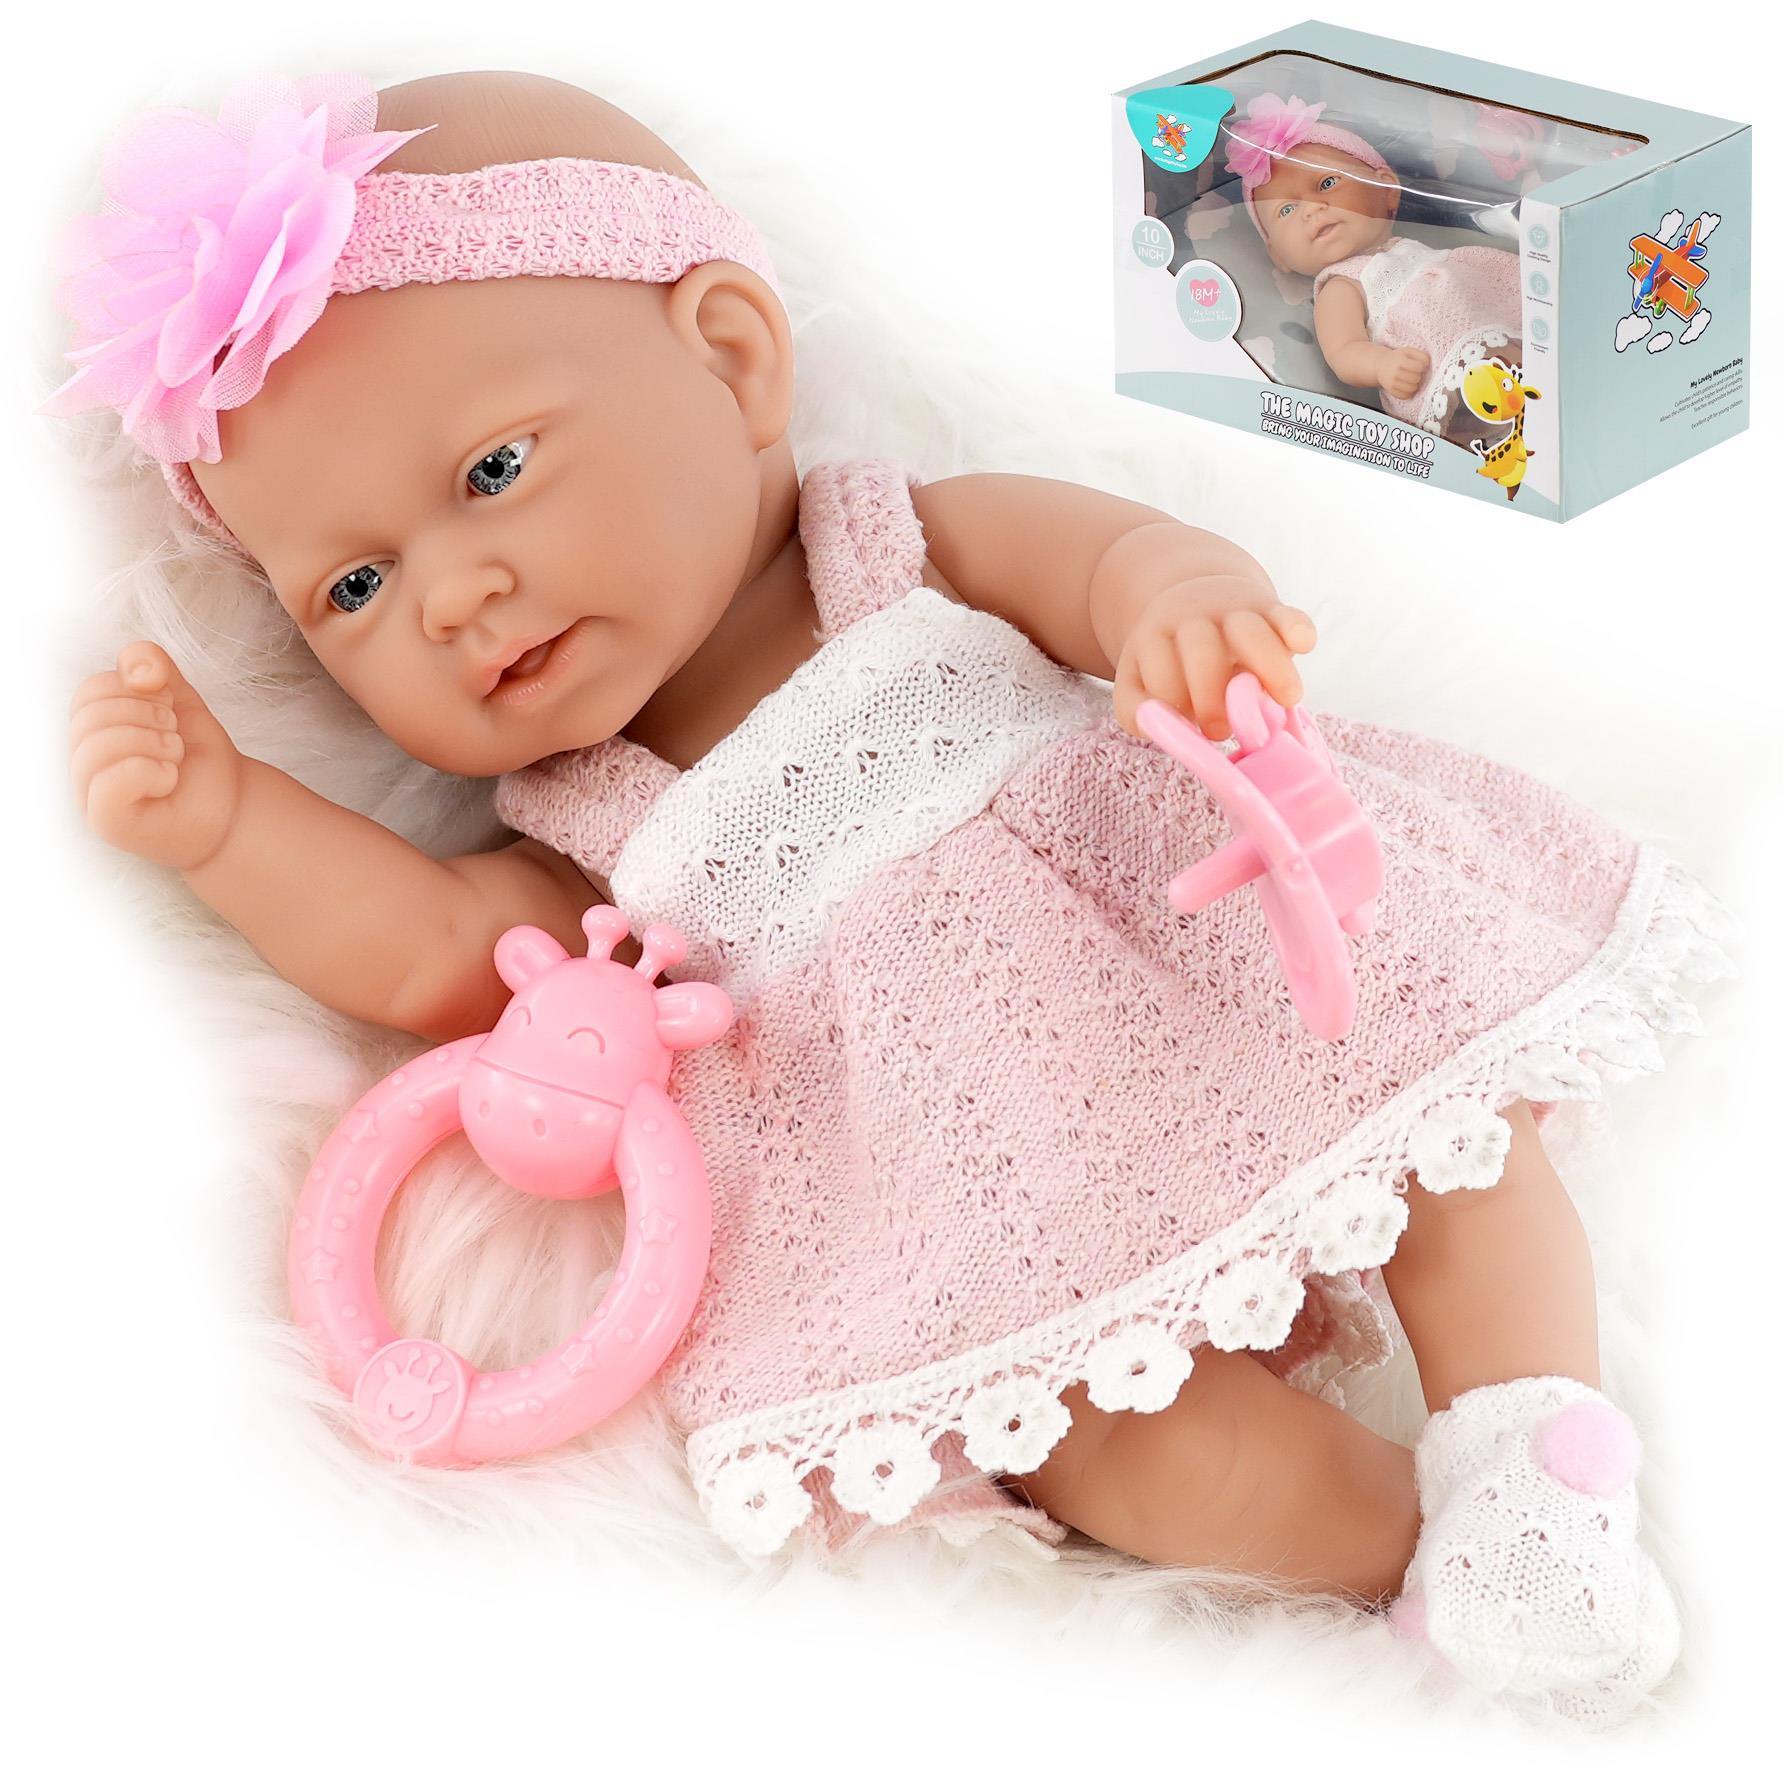 BiBi Baby Doll Play Set (25 cm / 10") by BiBi Doll - The Magic Toy Shop